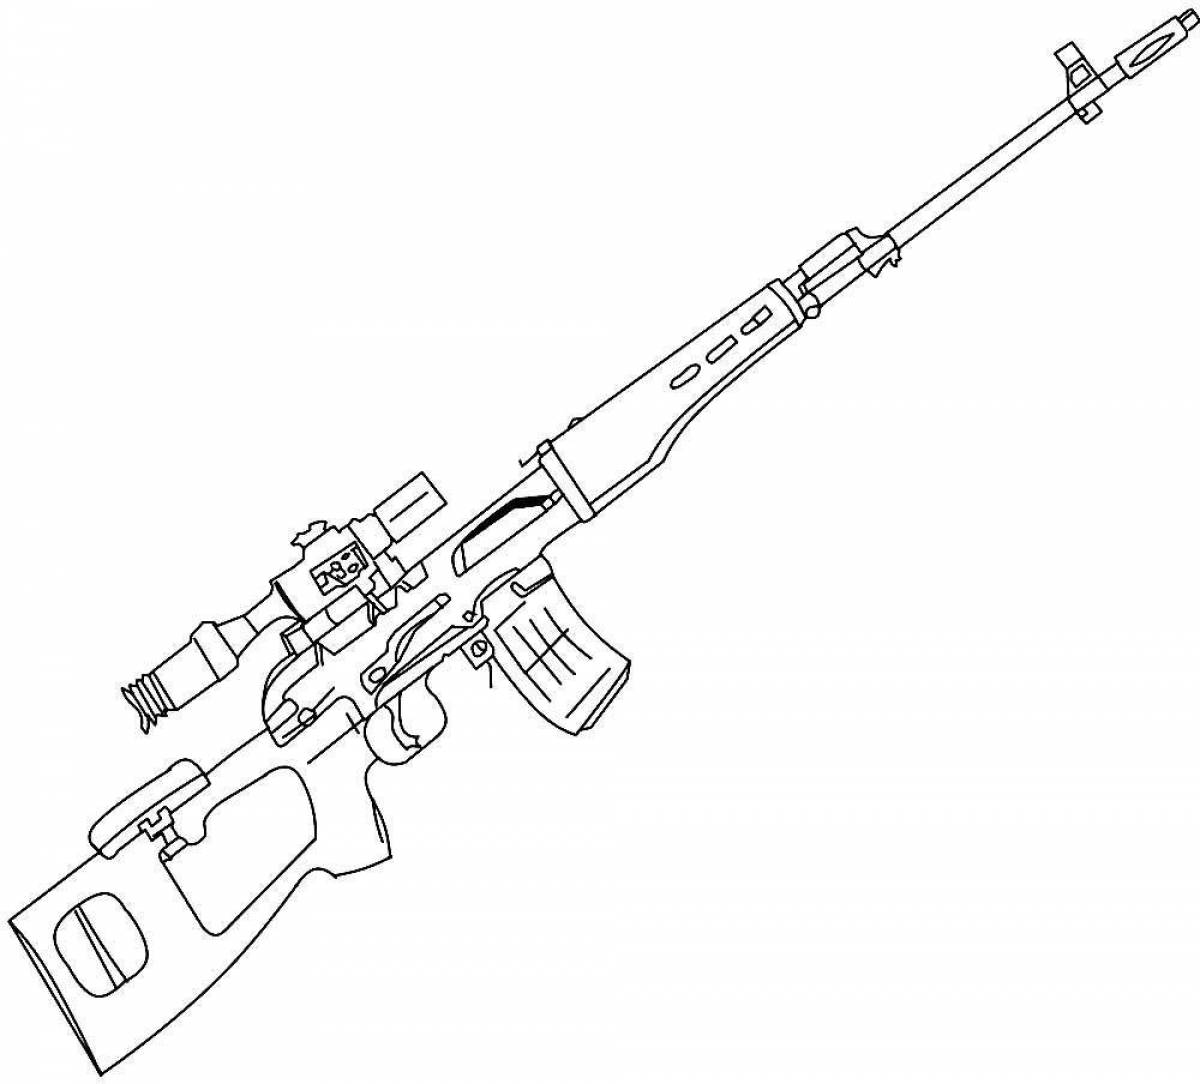 Fun rifle coloring for kids